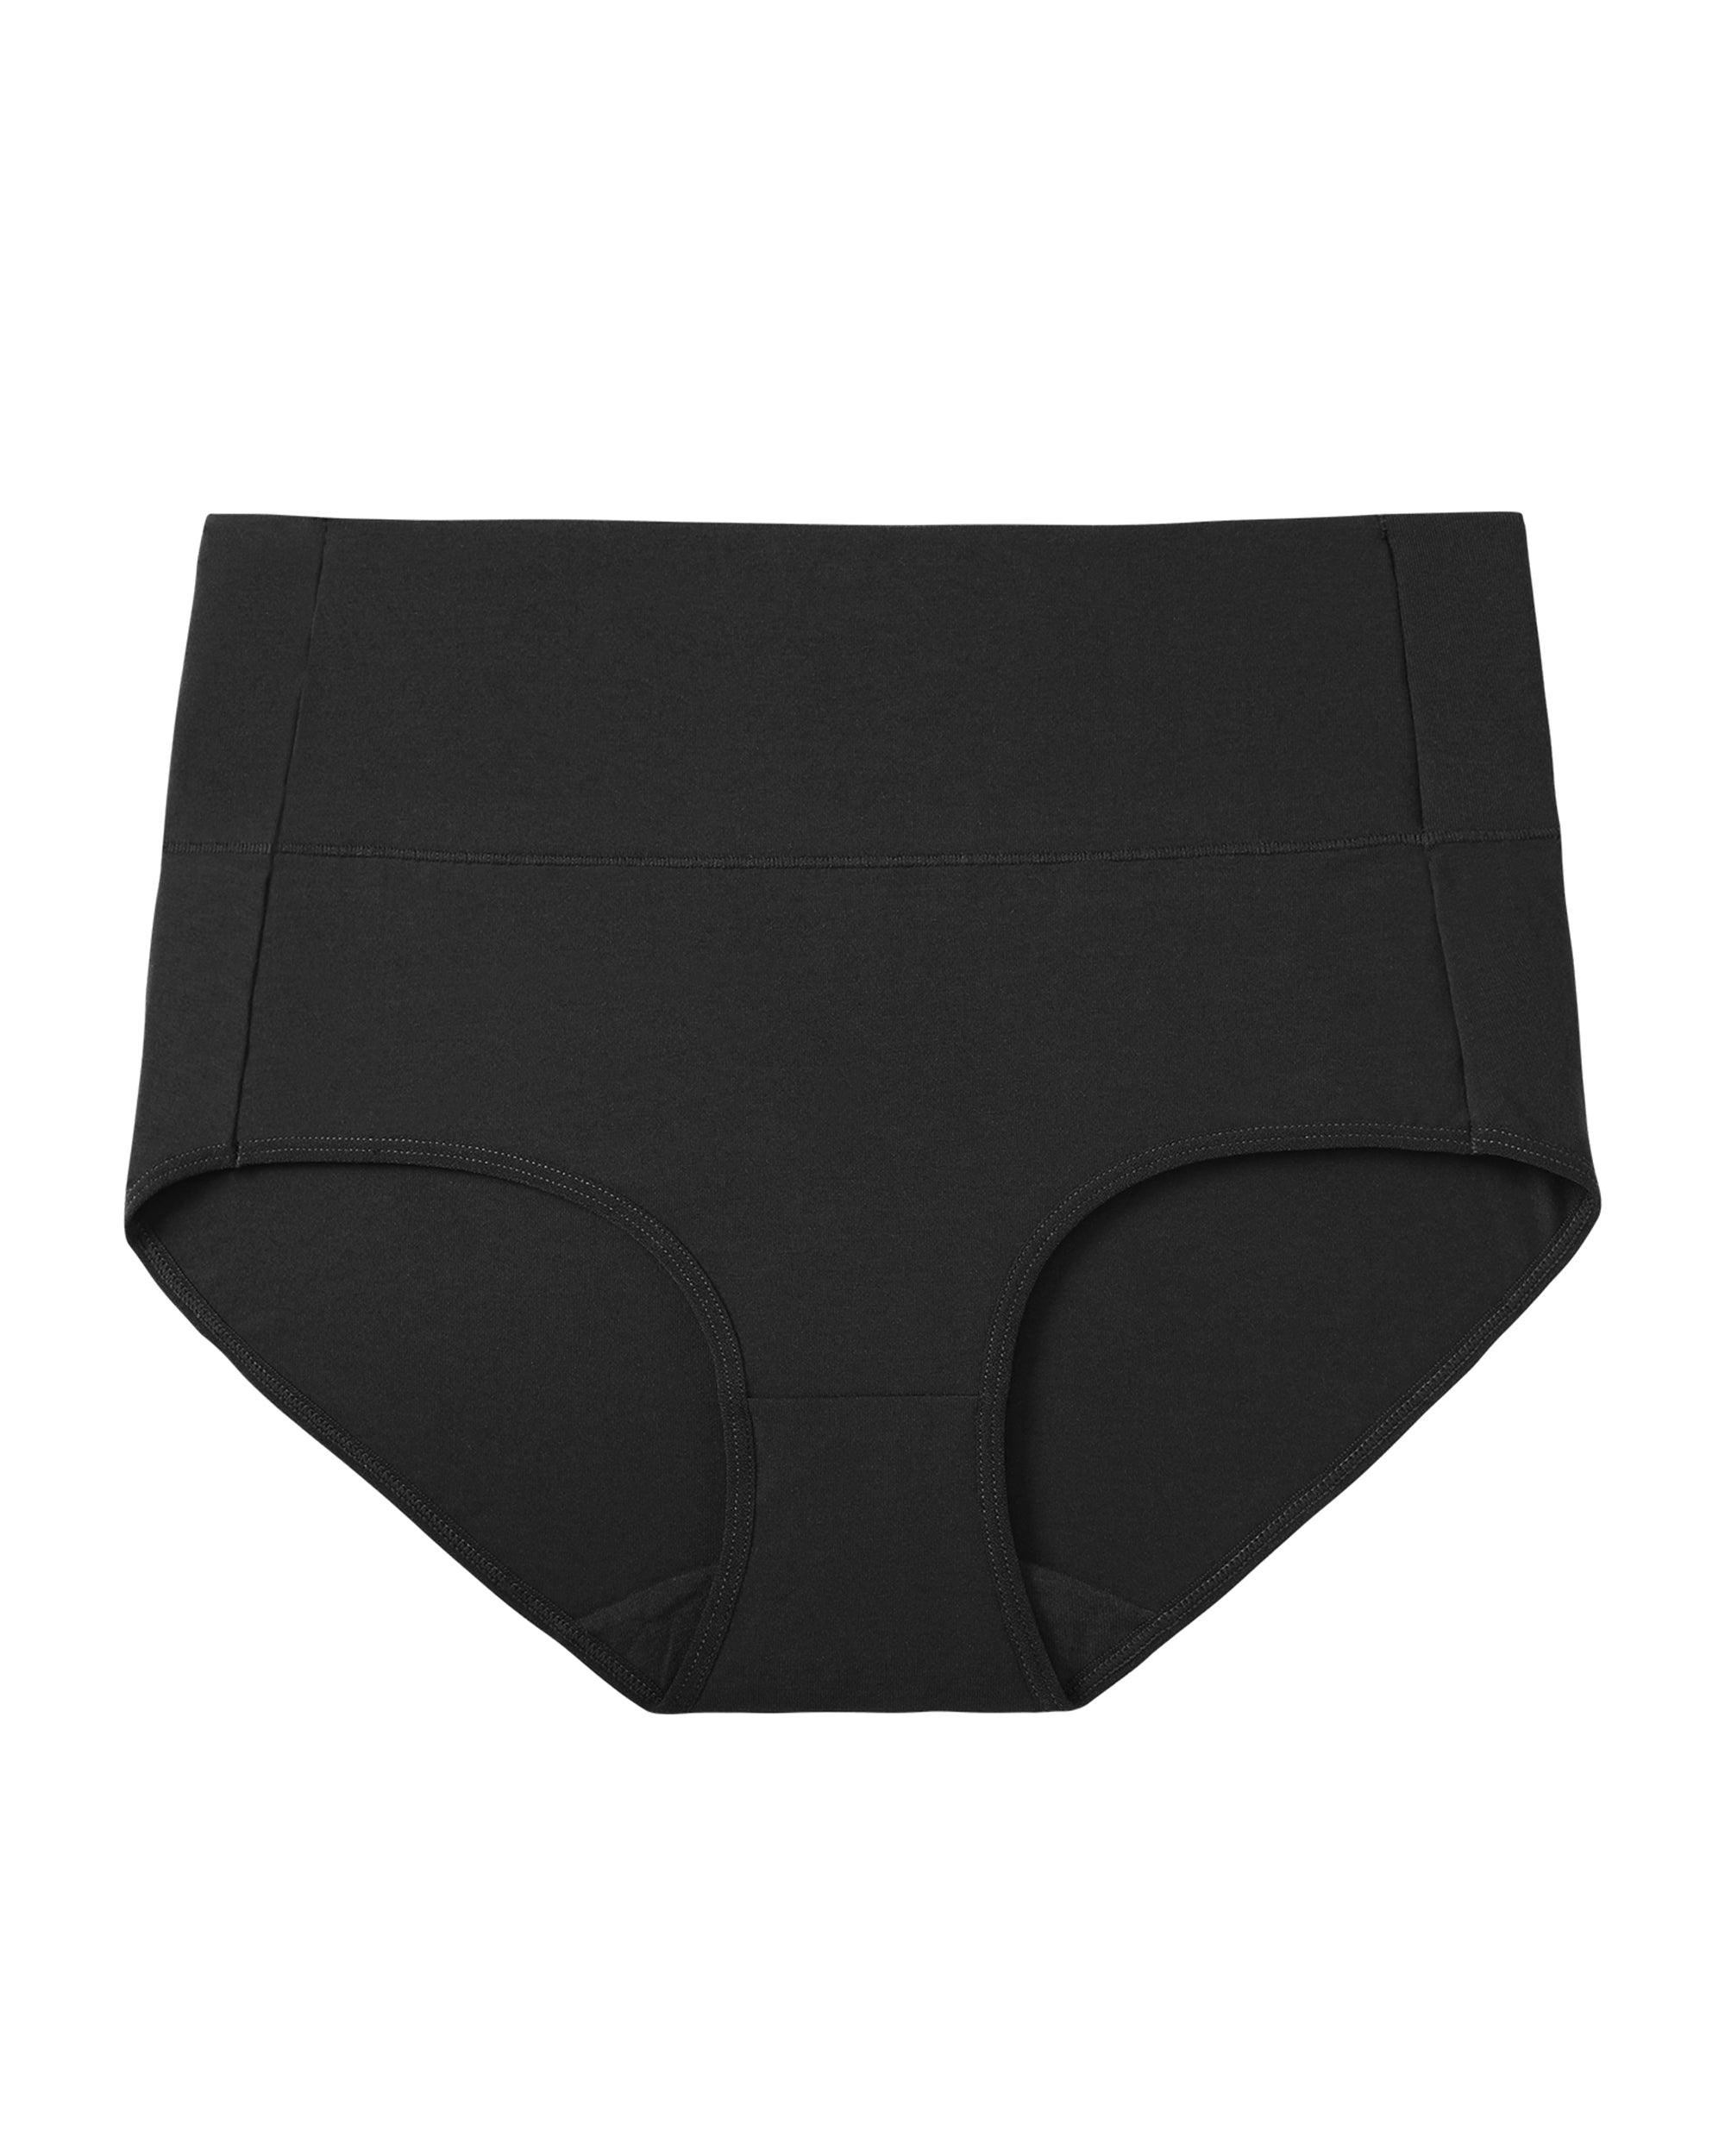 Altheanray High Waist Tummy Control Panties - Black5